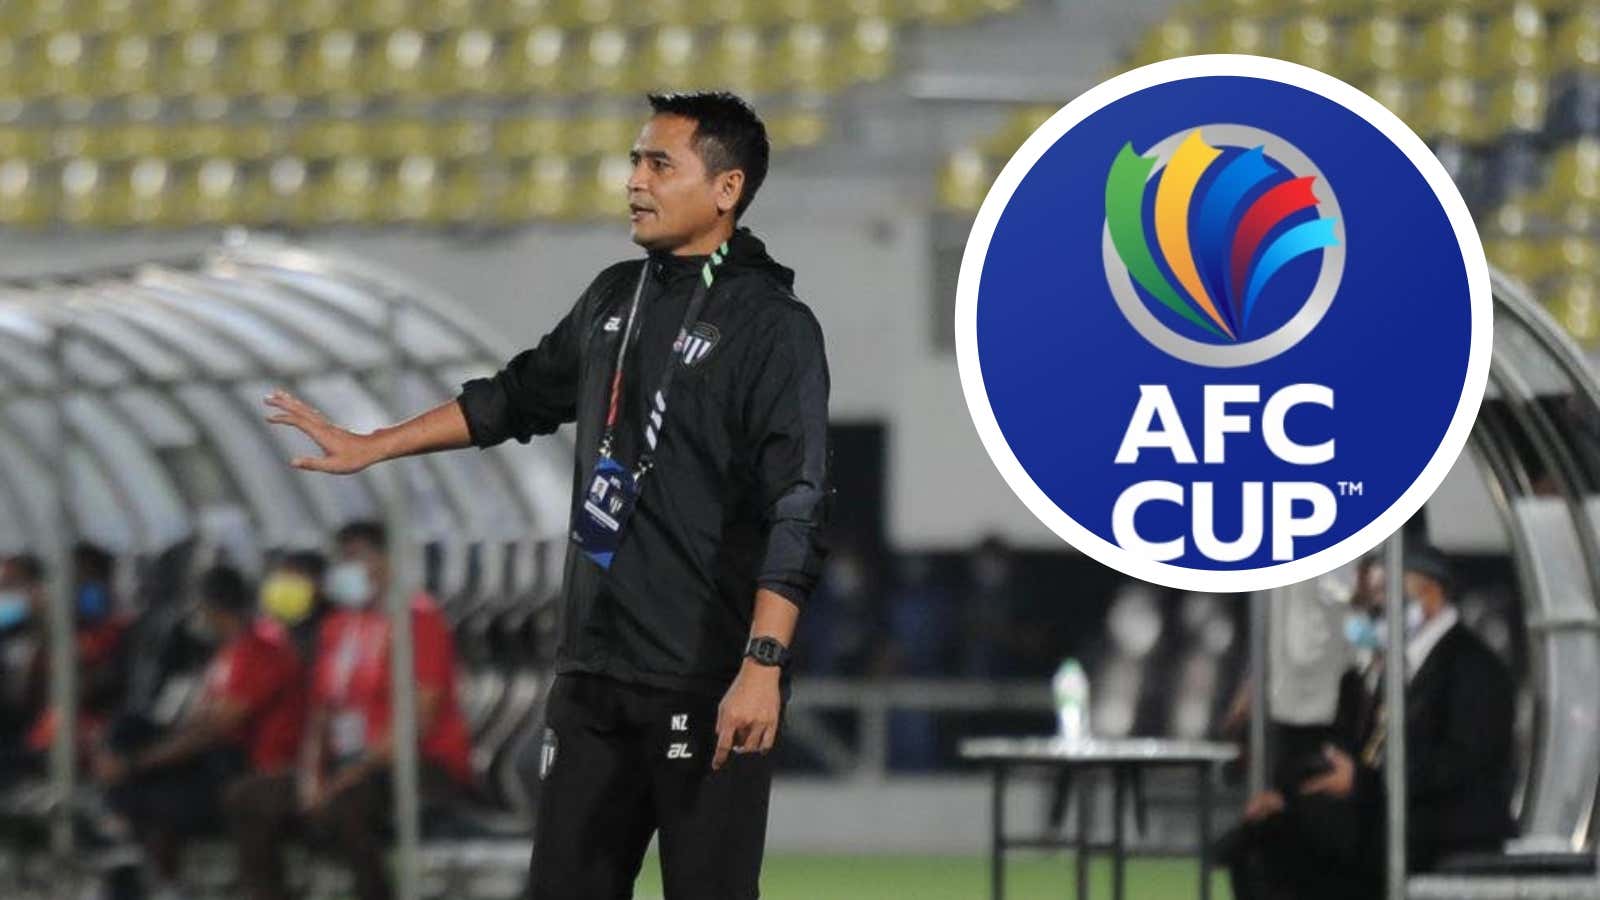 Nafuzi Zain, AFC Cup logo, 28 Jan 2021